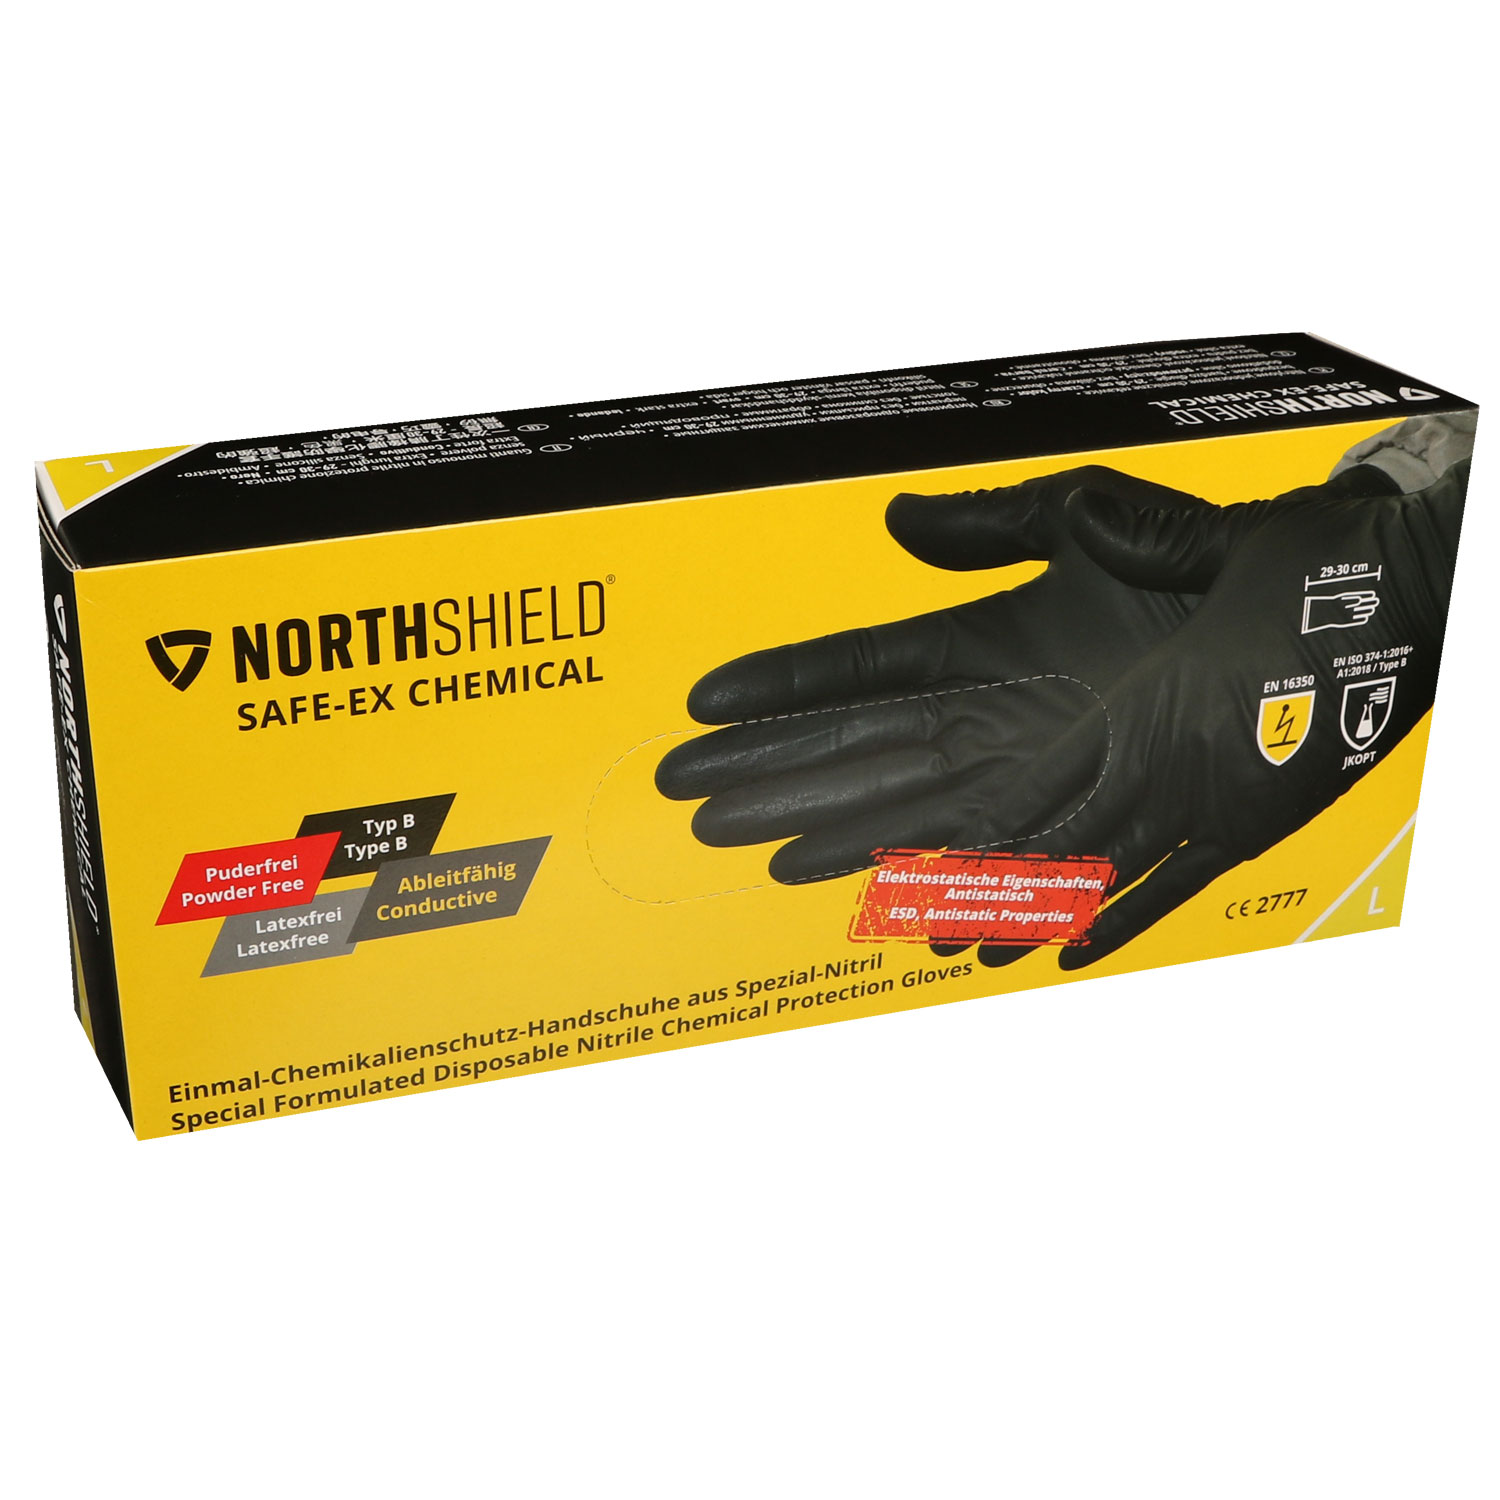 Northshield Nitril Handschuhe SAFE-EX CHEMICAL